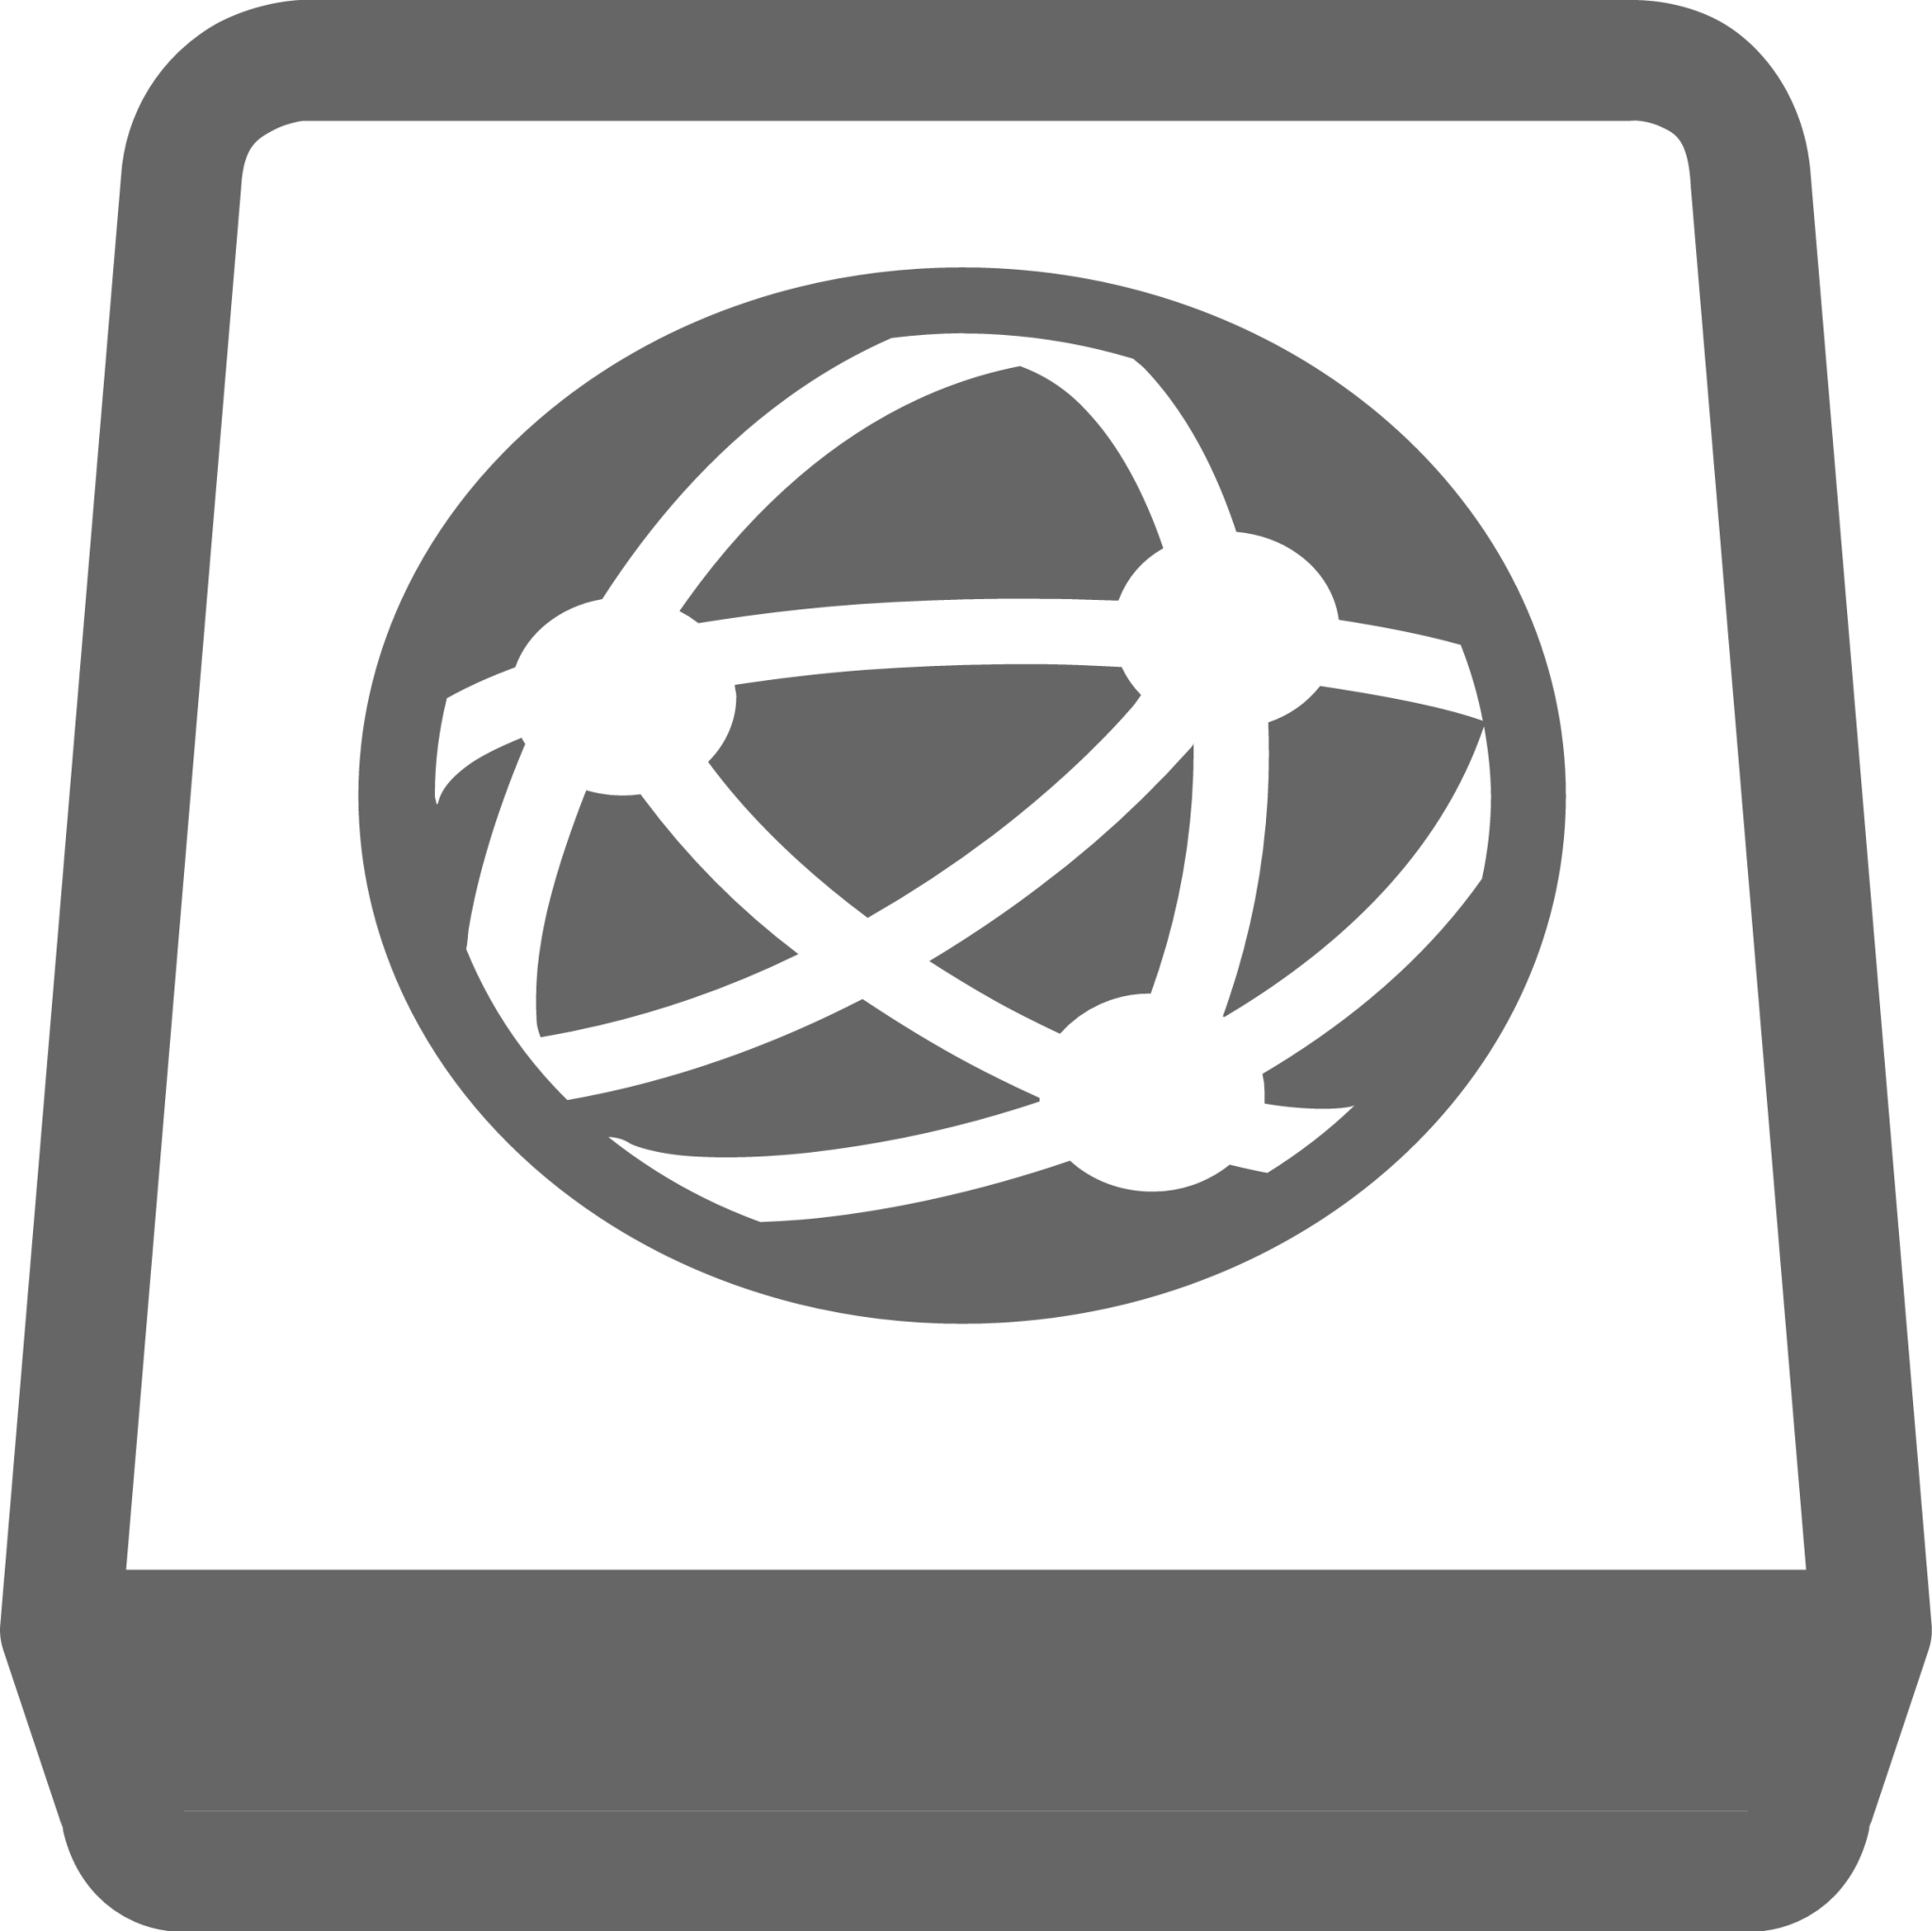 network server symbolic icon